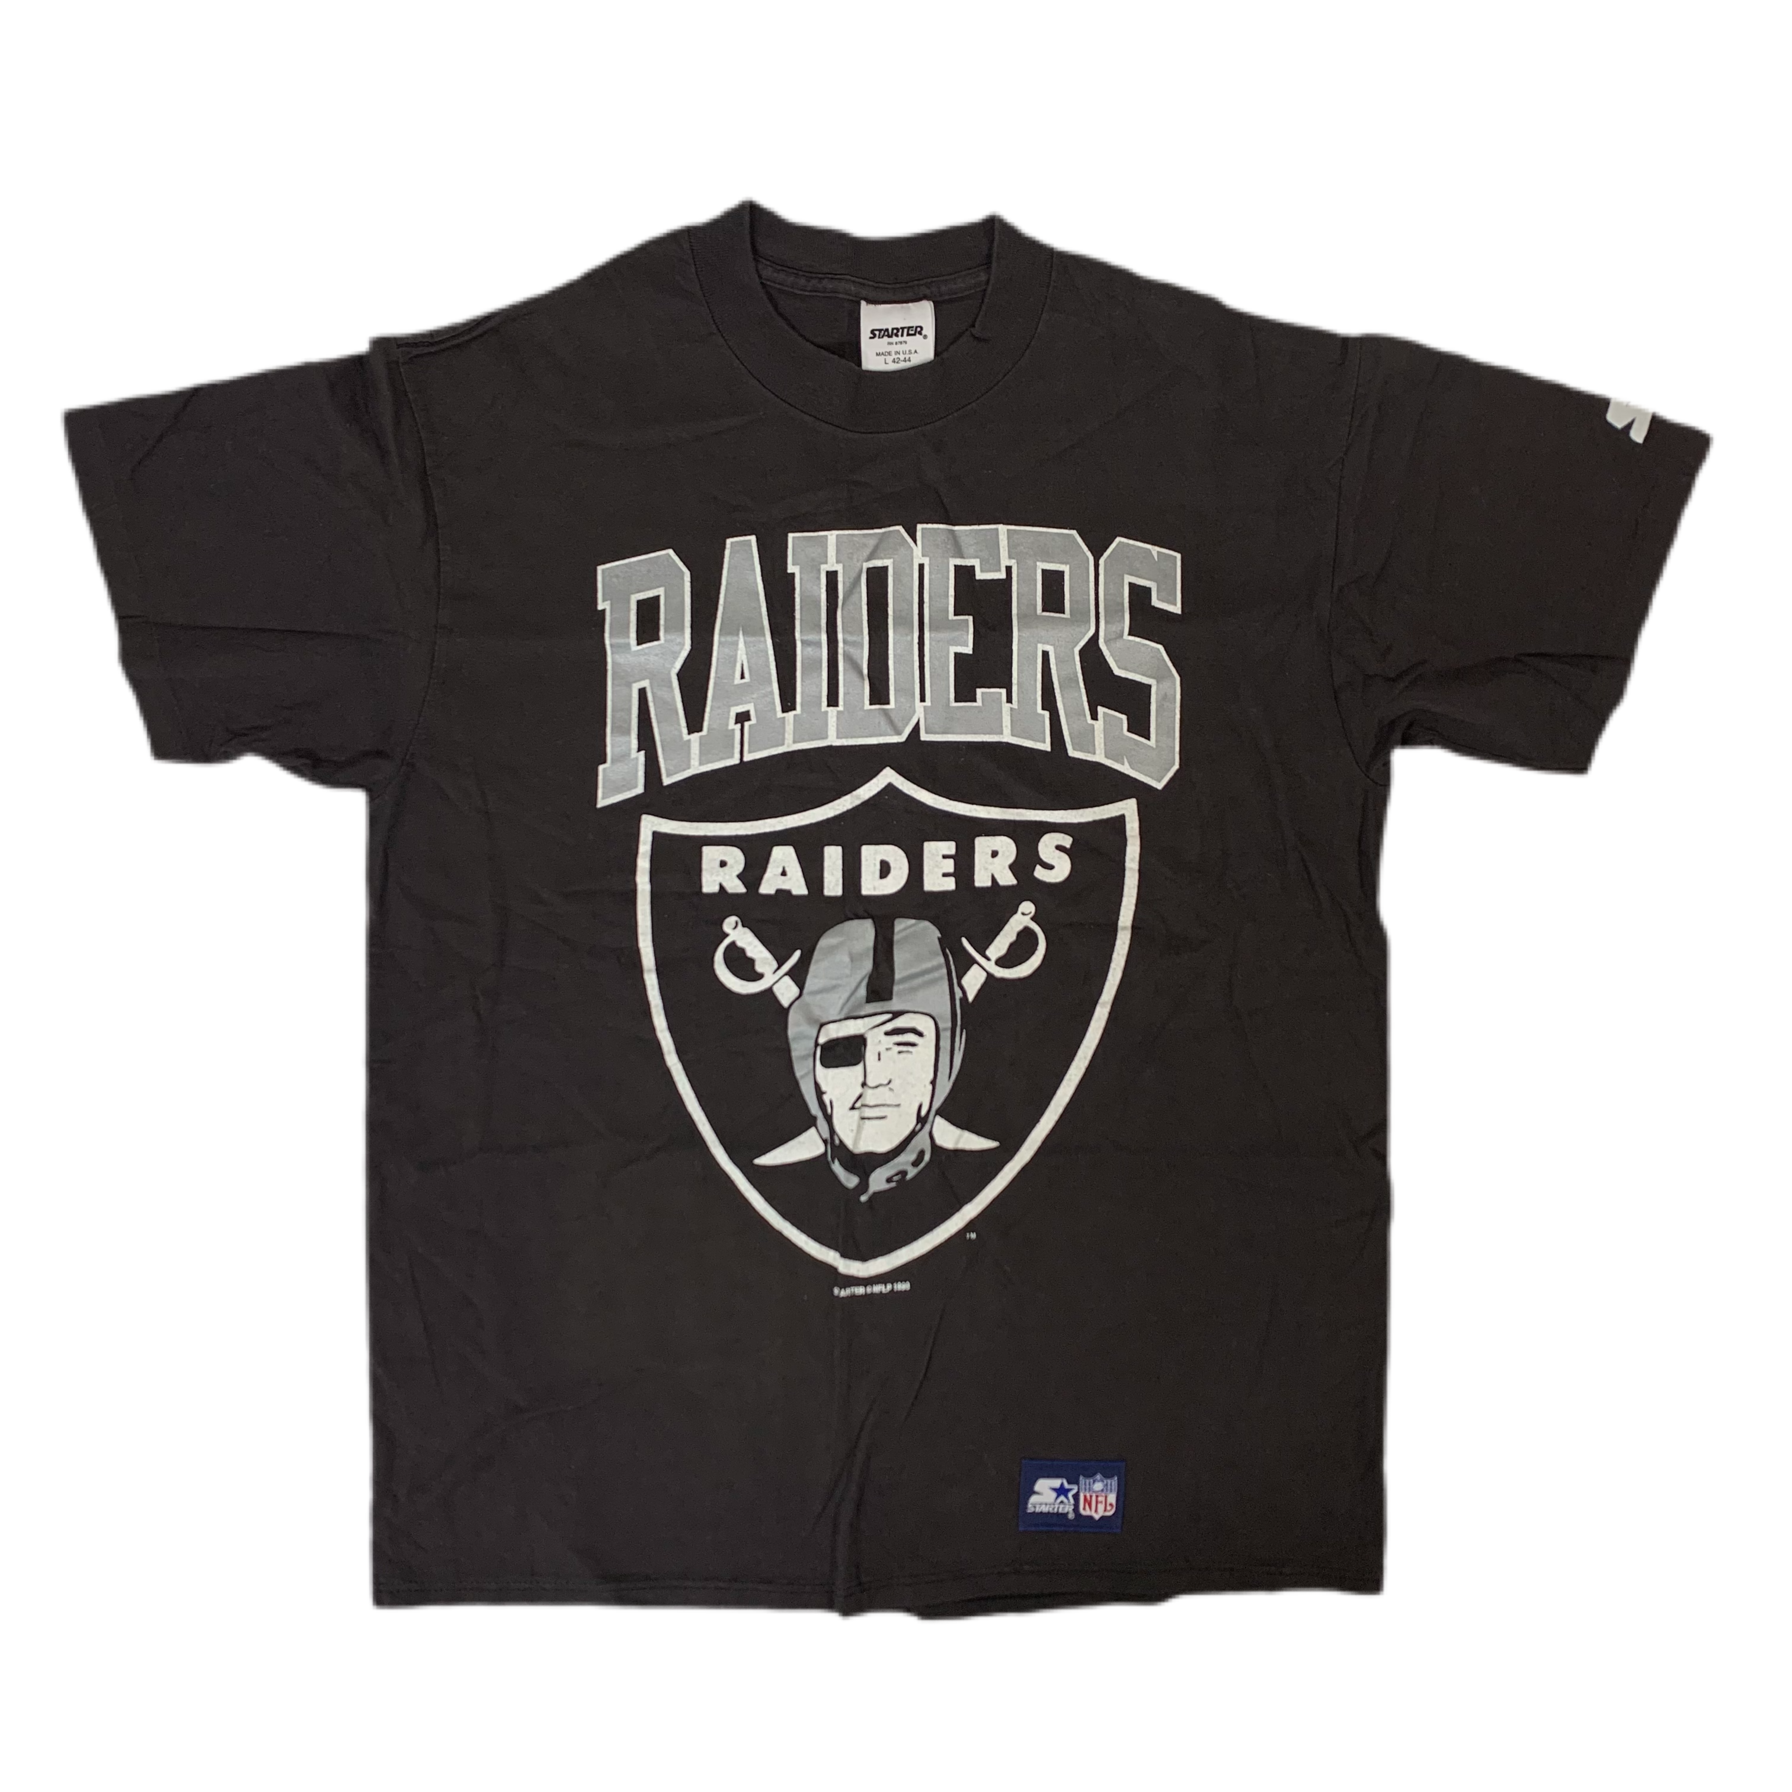 Raiders Fan Shirt 